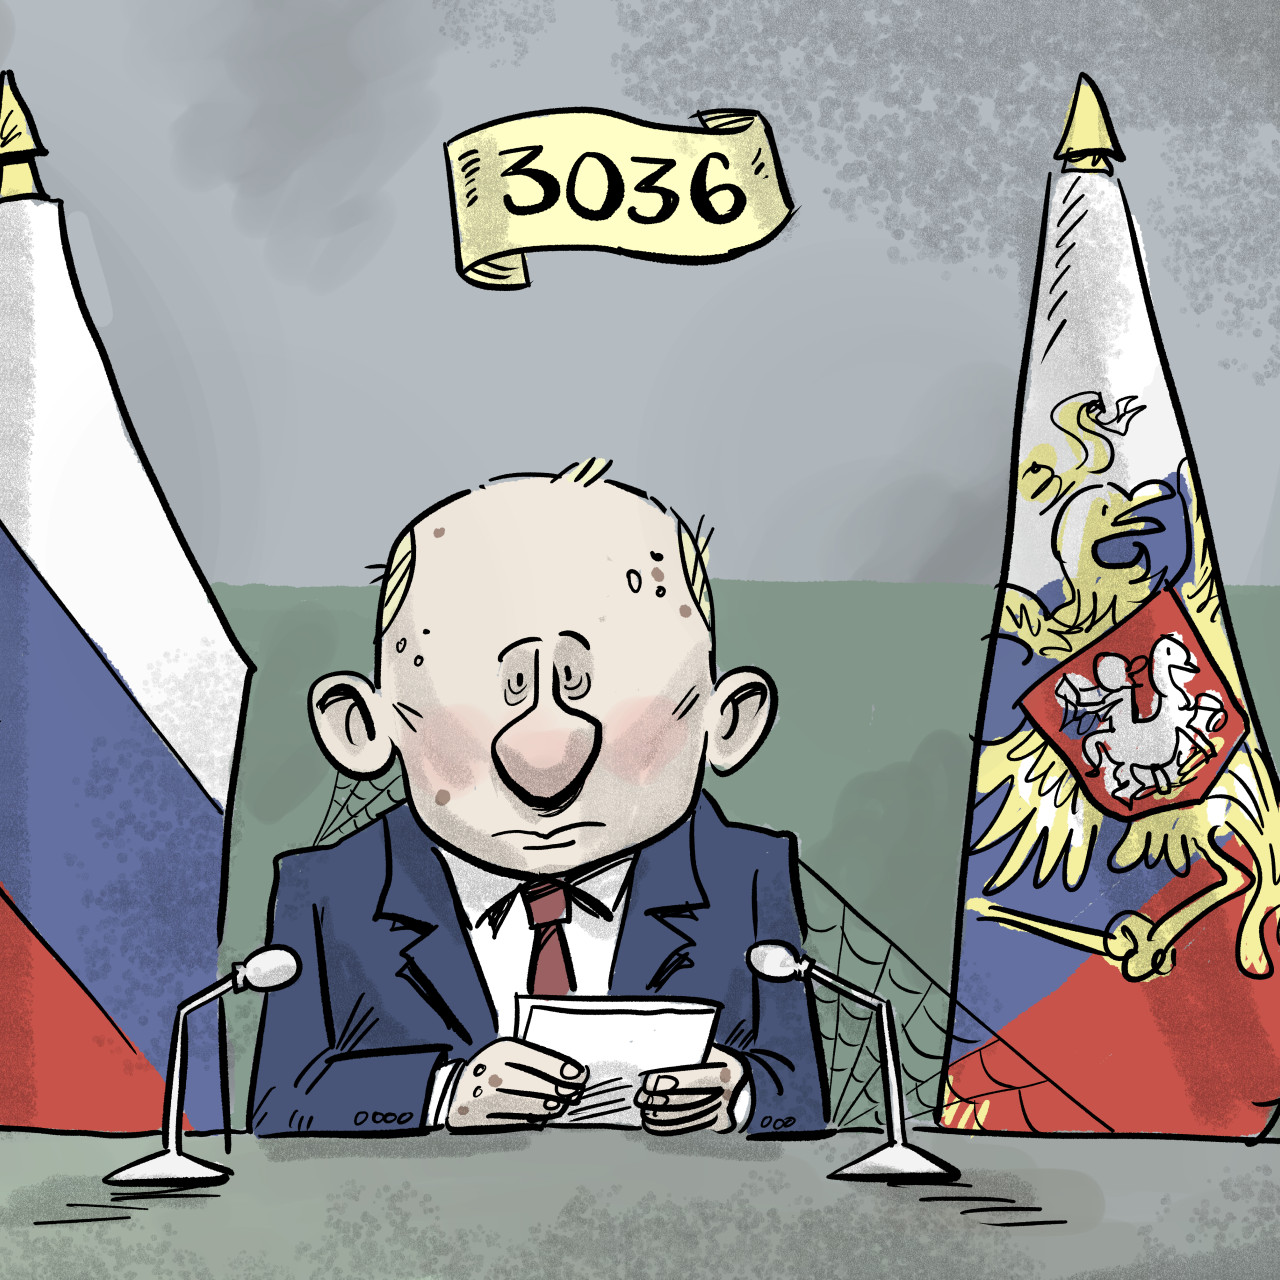 Shooty: Putin 3036 (2.7.2020)